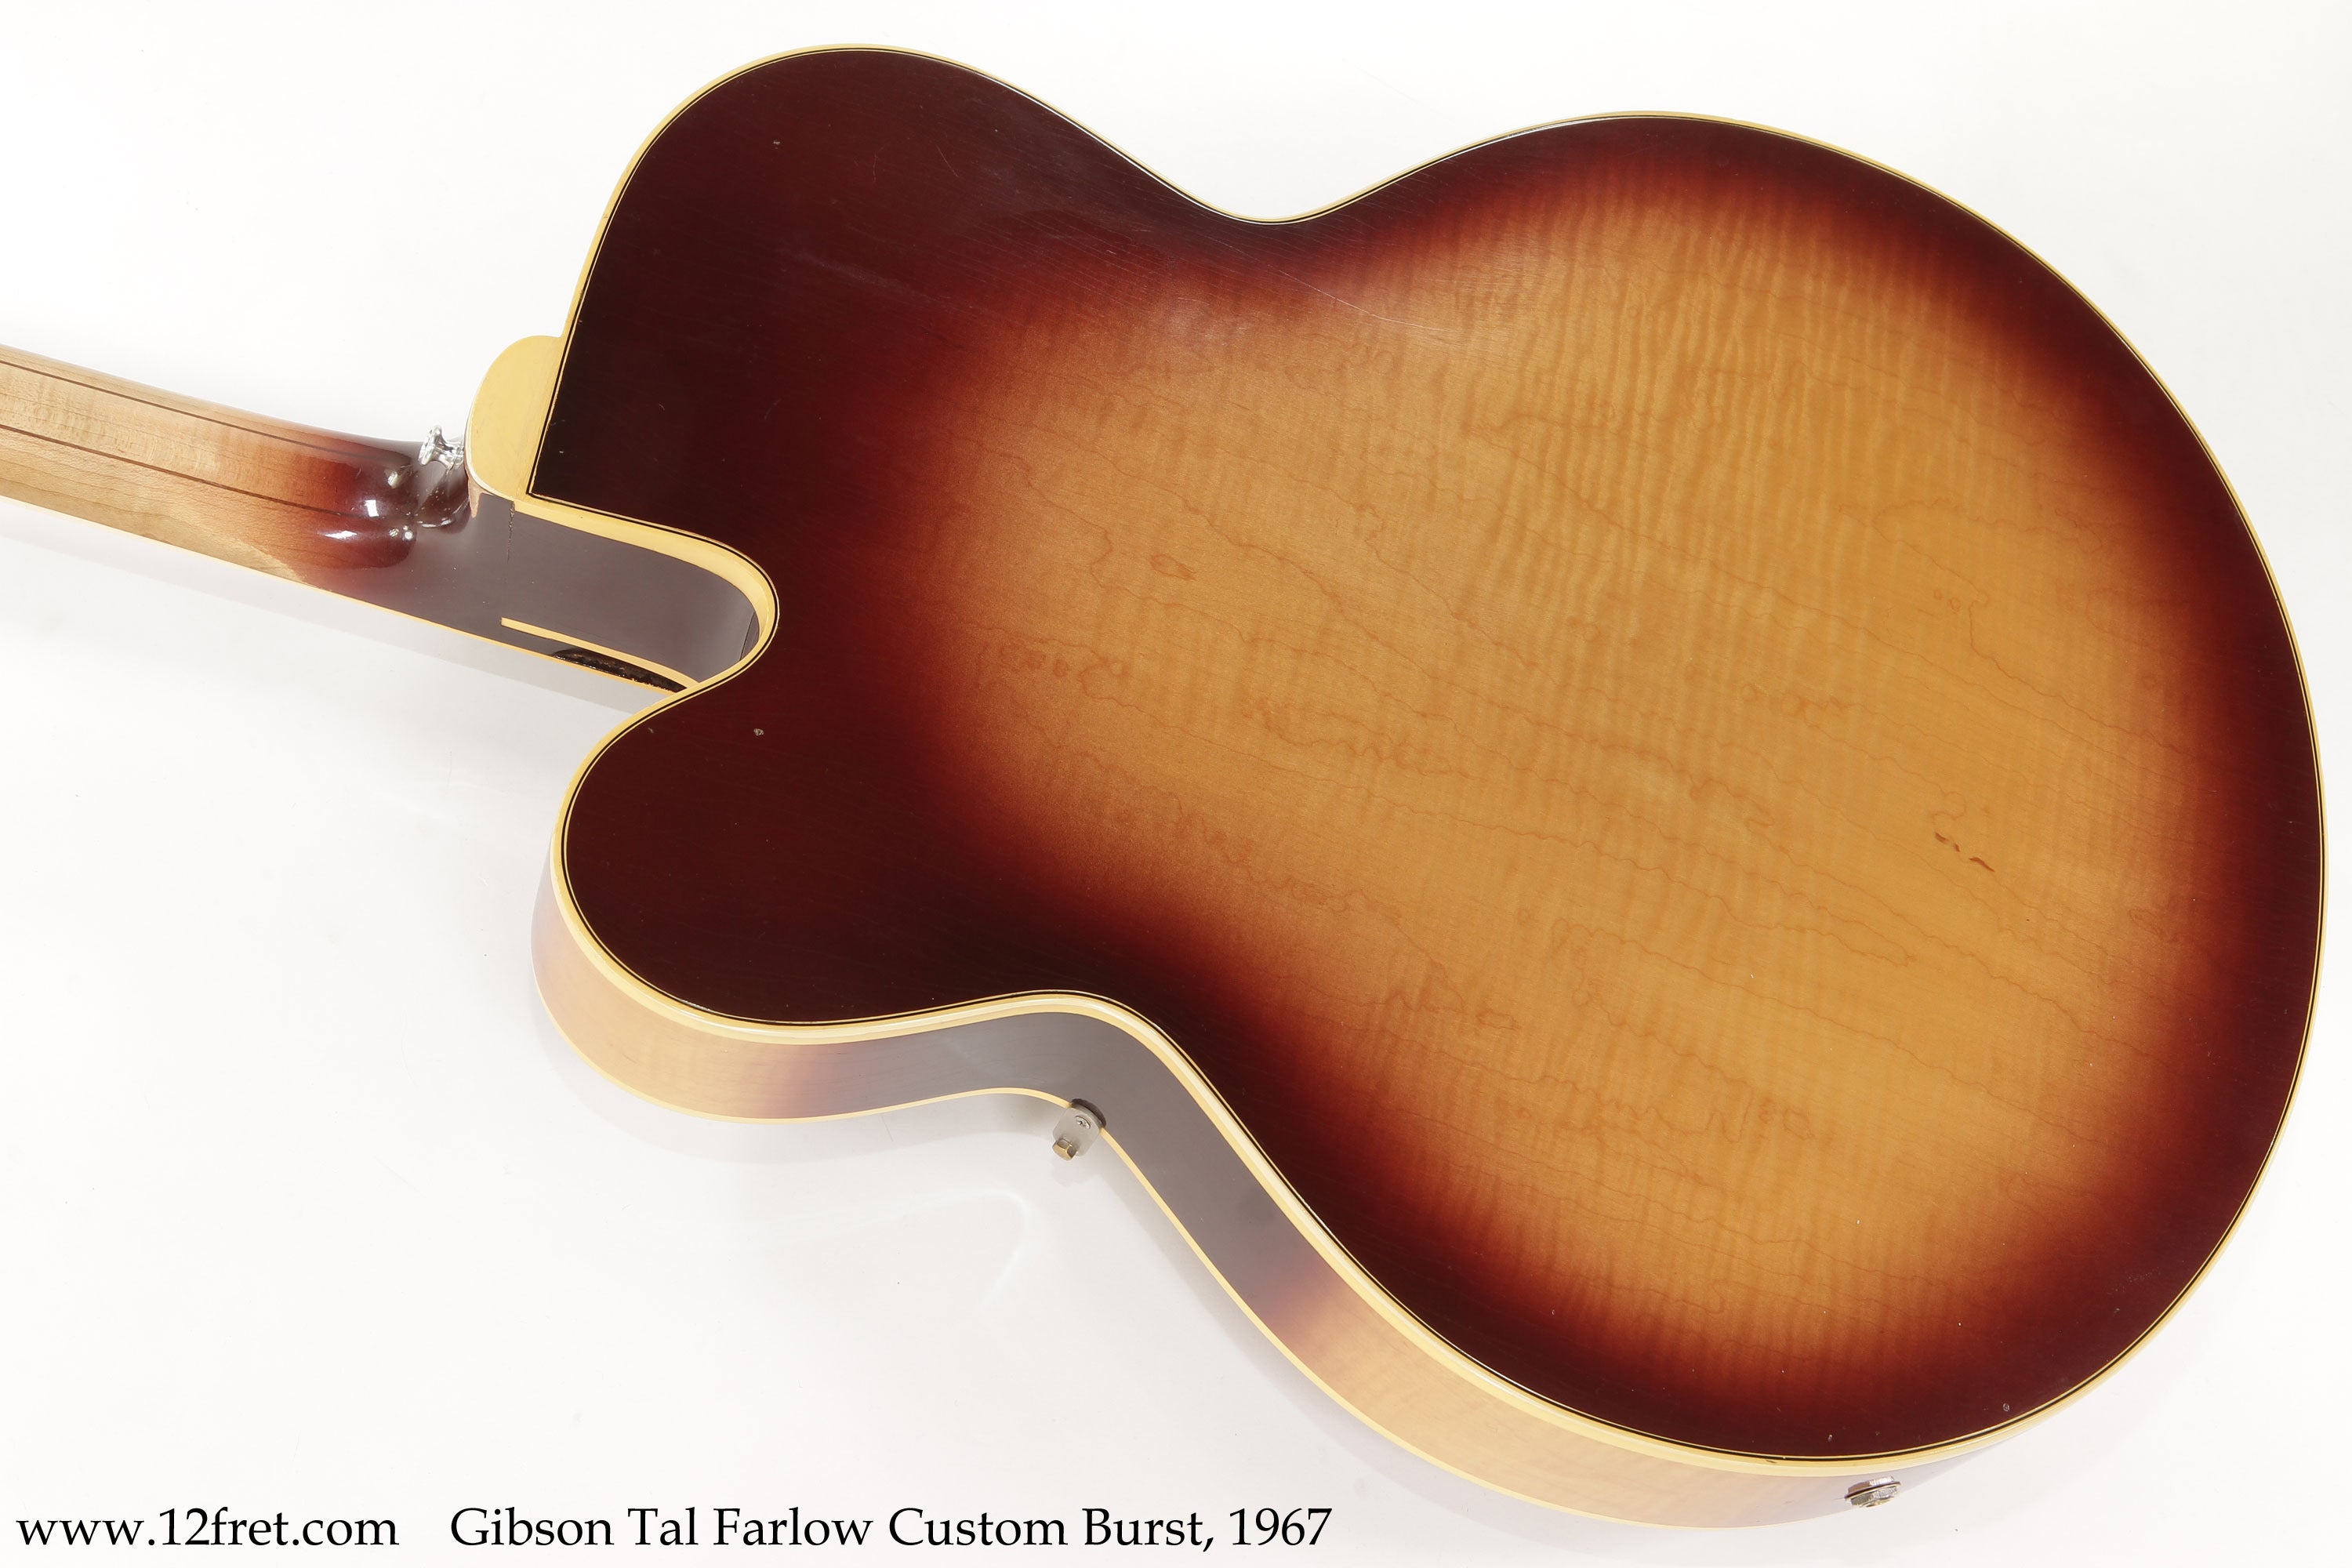 Gibson Tal Farlow, 1967 - The Twelfth Fret